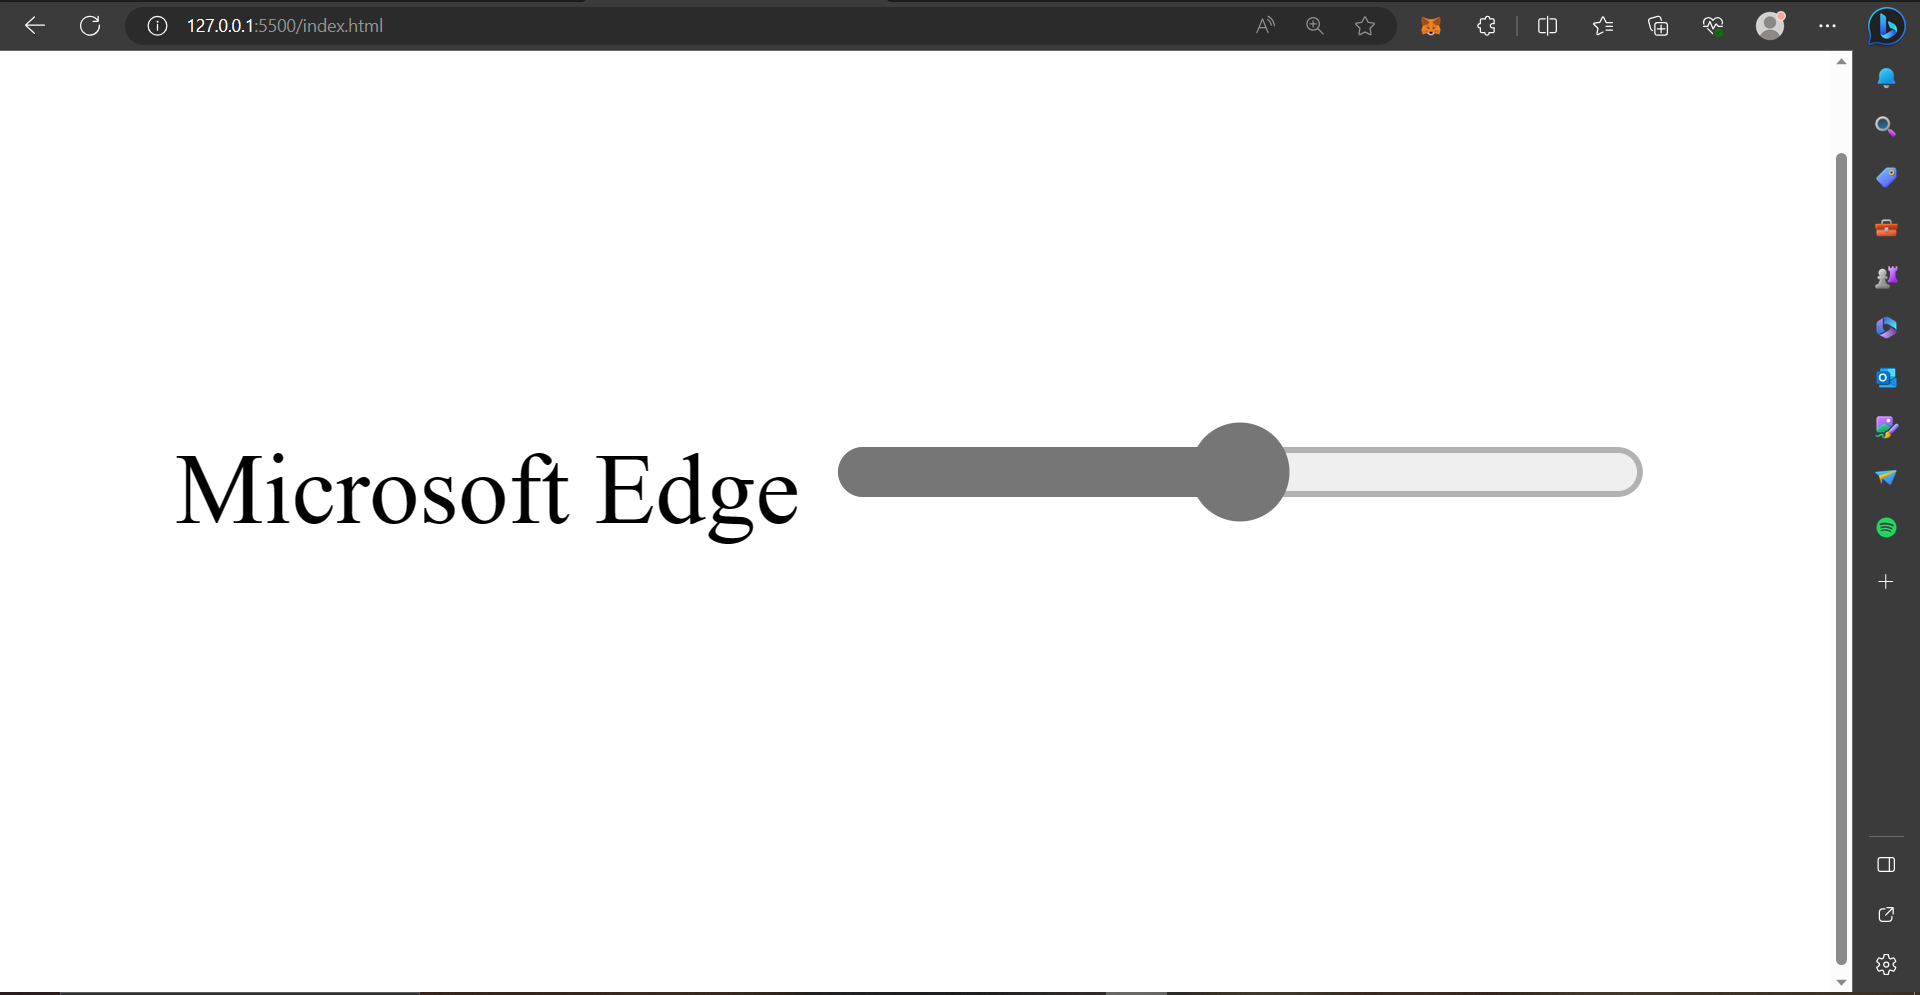 Microsoft Edge default style for range input